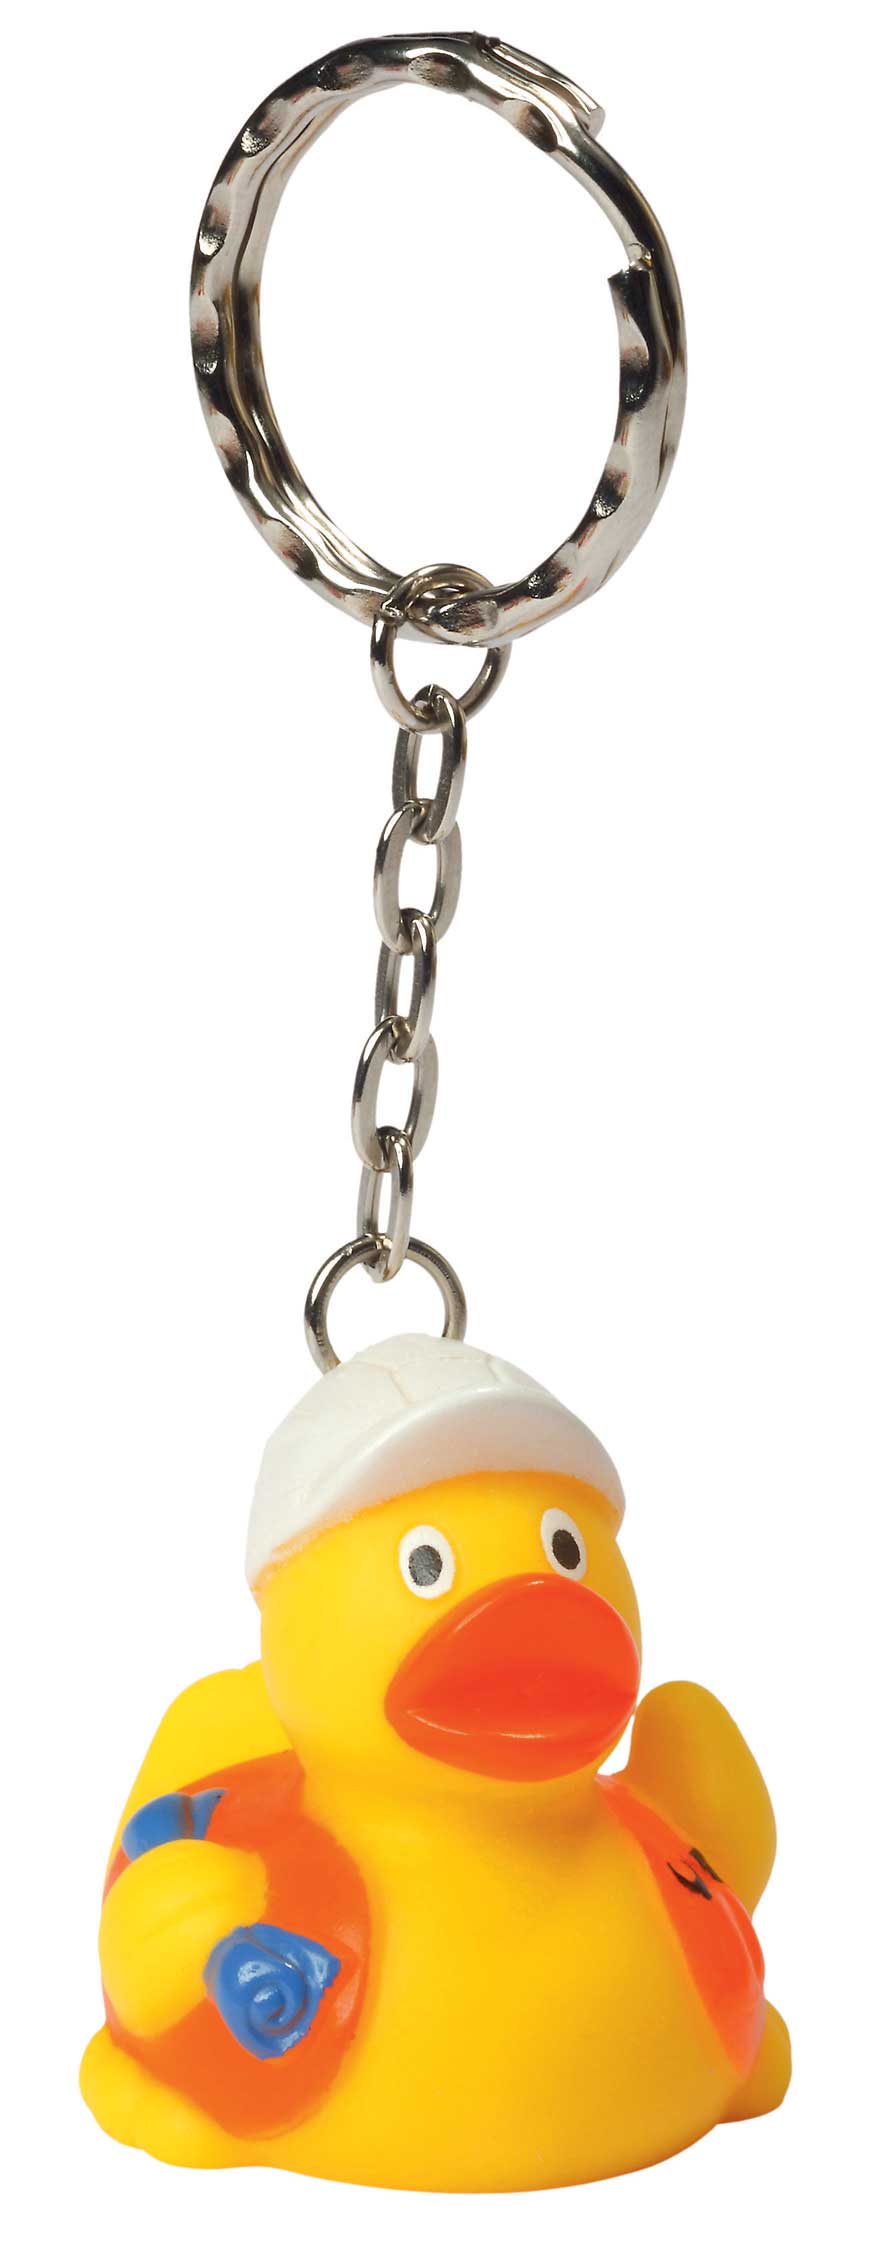 Mini duck keychain, construction worker